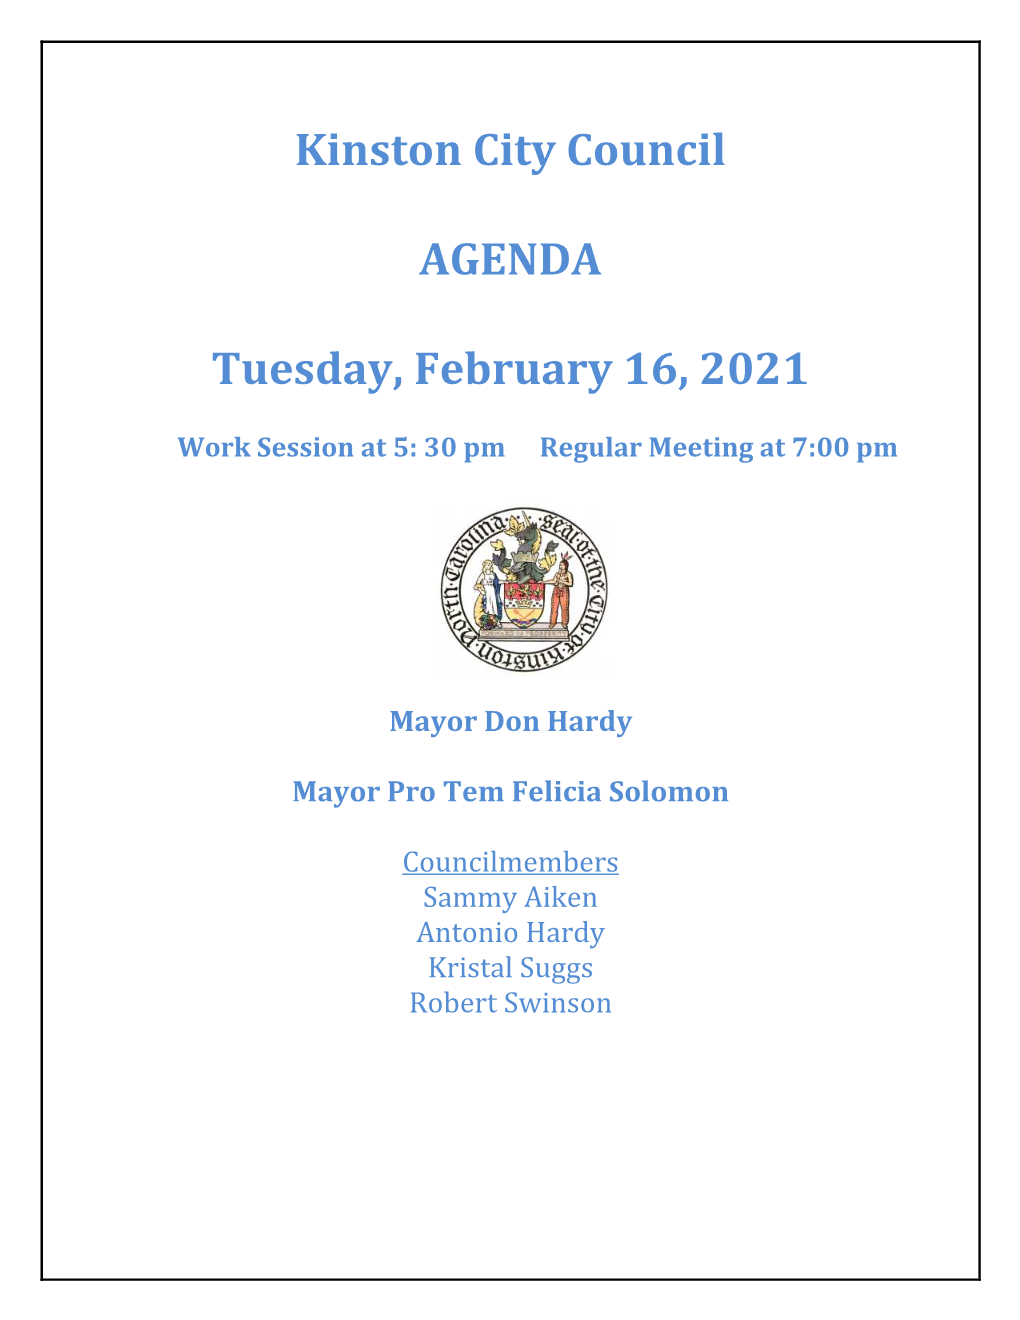 Kinston City Council Agenda Tuesday, February 16, 2021